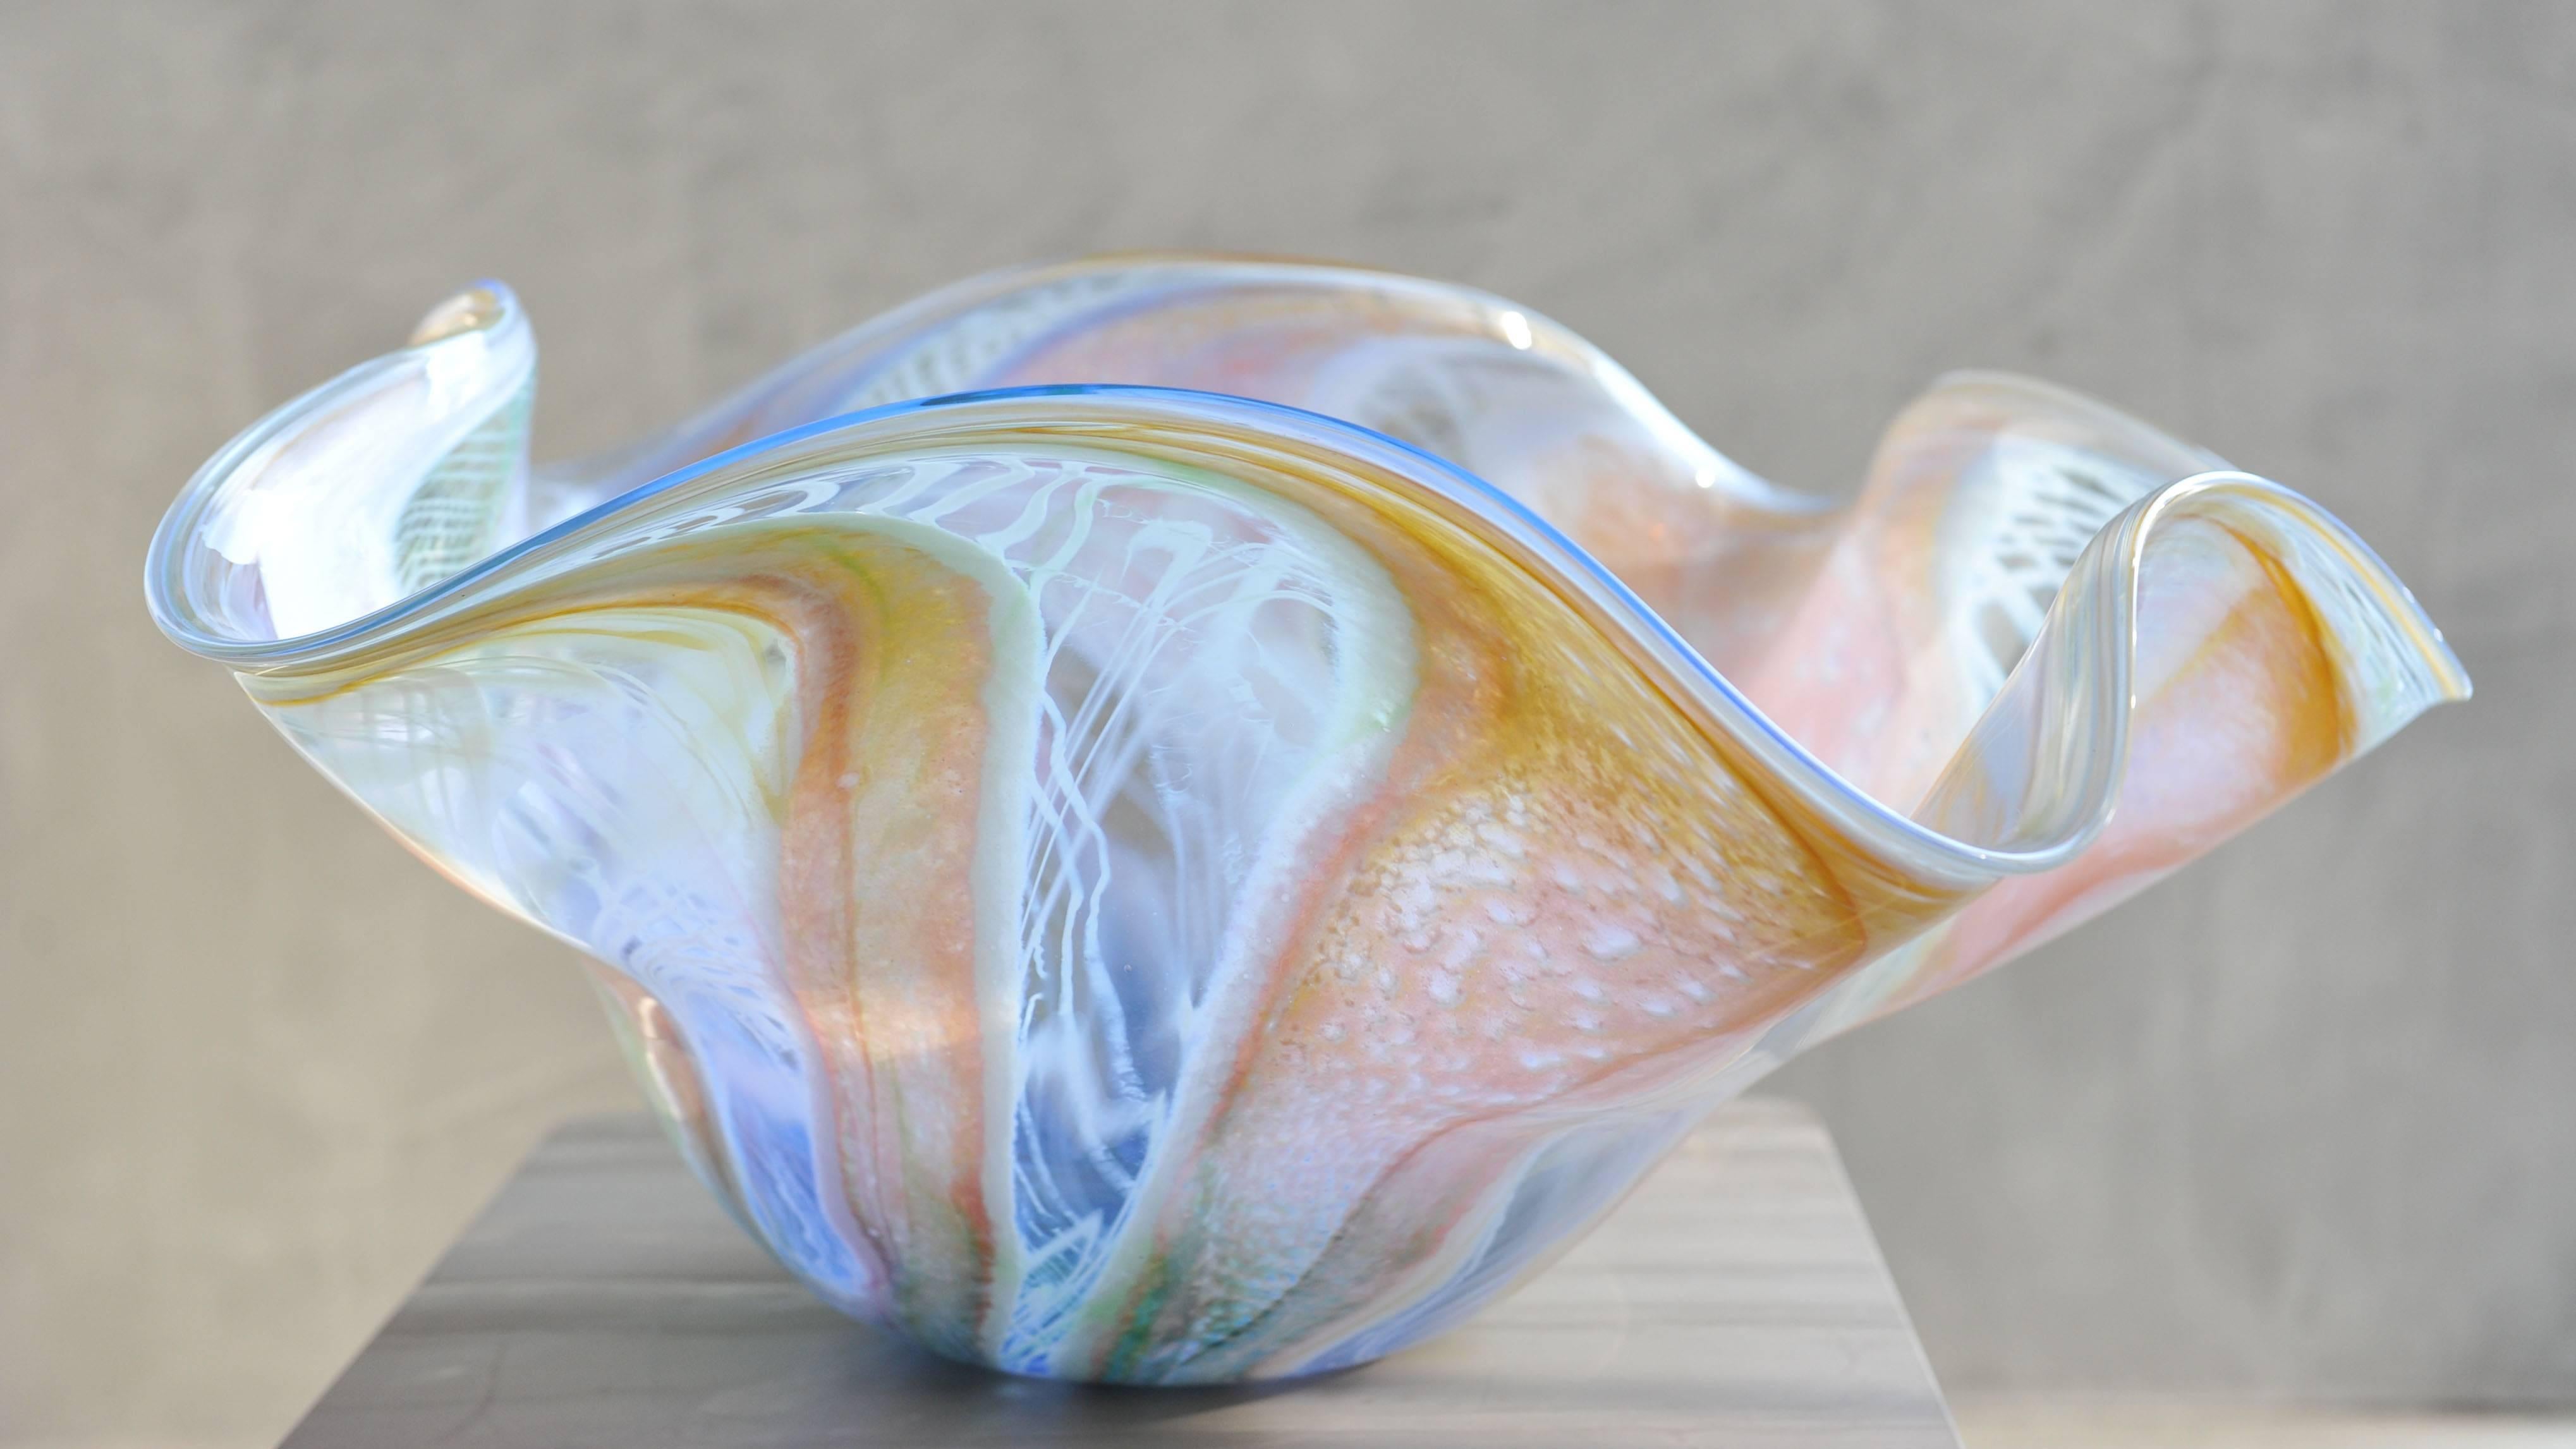 Richard Price Figurative Sculpture - Blown Glass Decorative Bowl. Murano glass style colors in blue, pink, white.